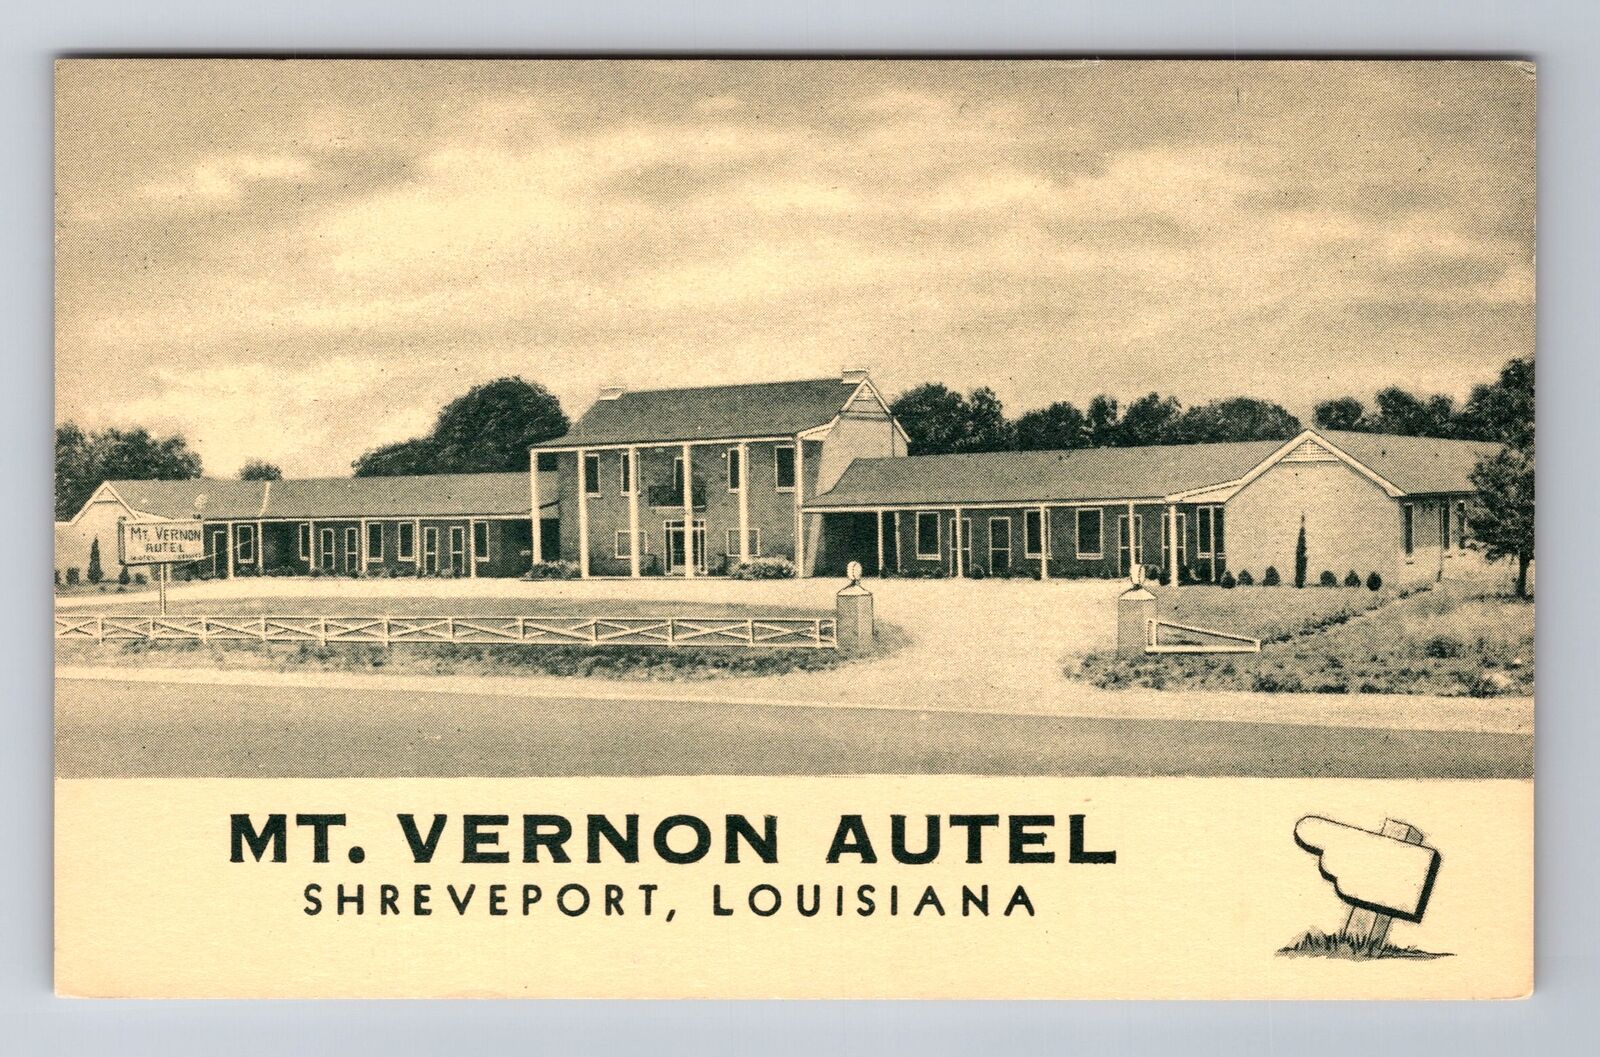 Shreveport LA-Louisiana, Mt Vernon Autel, Advertising, Vintage Souvenir Postcard